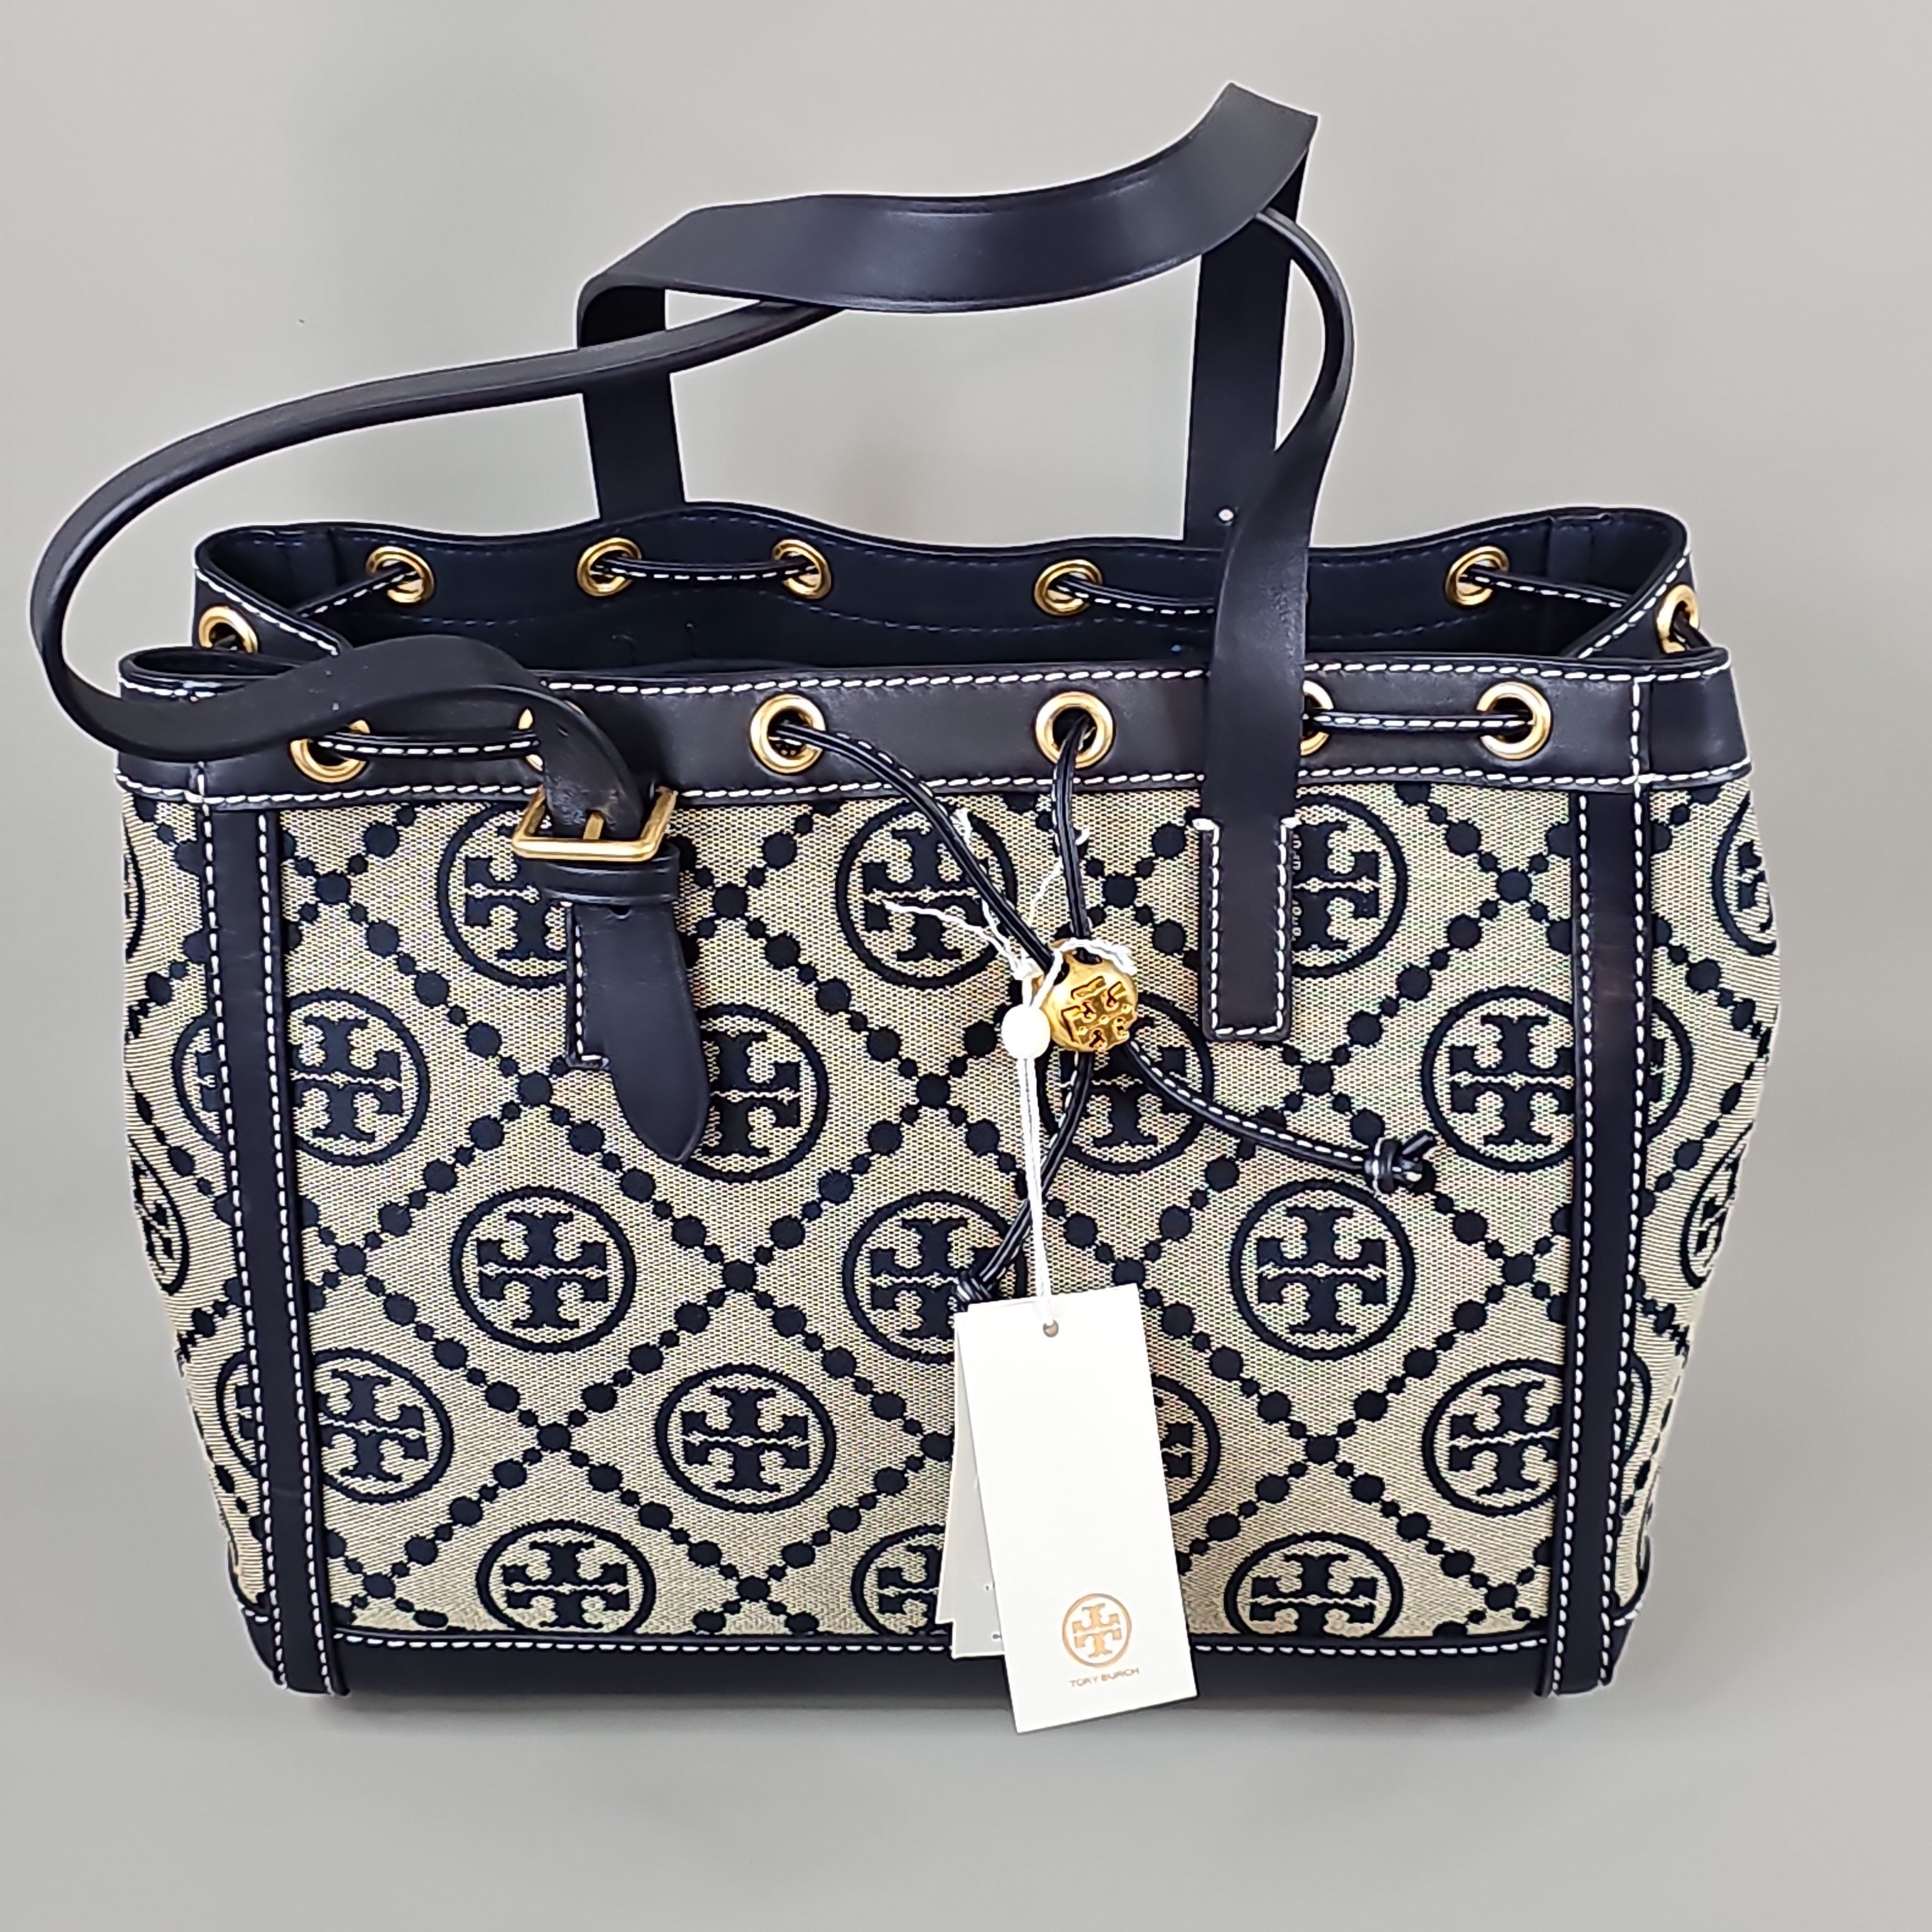 Tory Burch T Monogram Jacquard Mini Duffle Bag Leather Bag Hazel $498